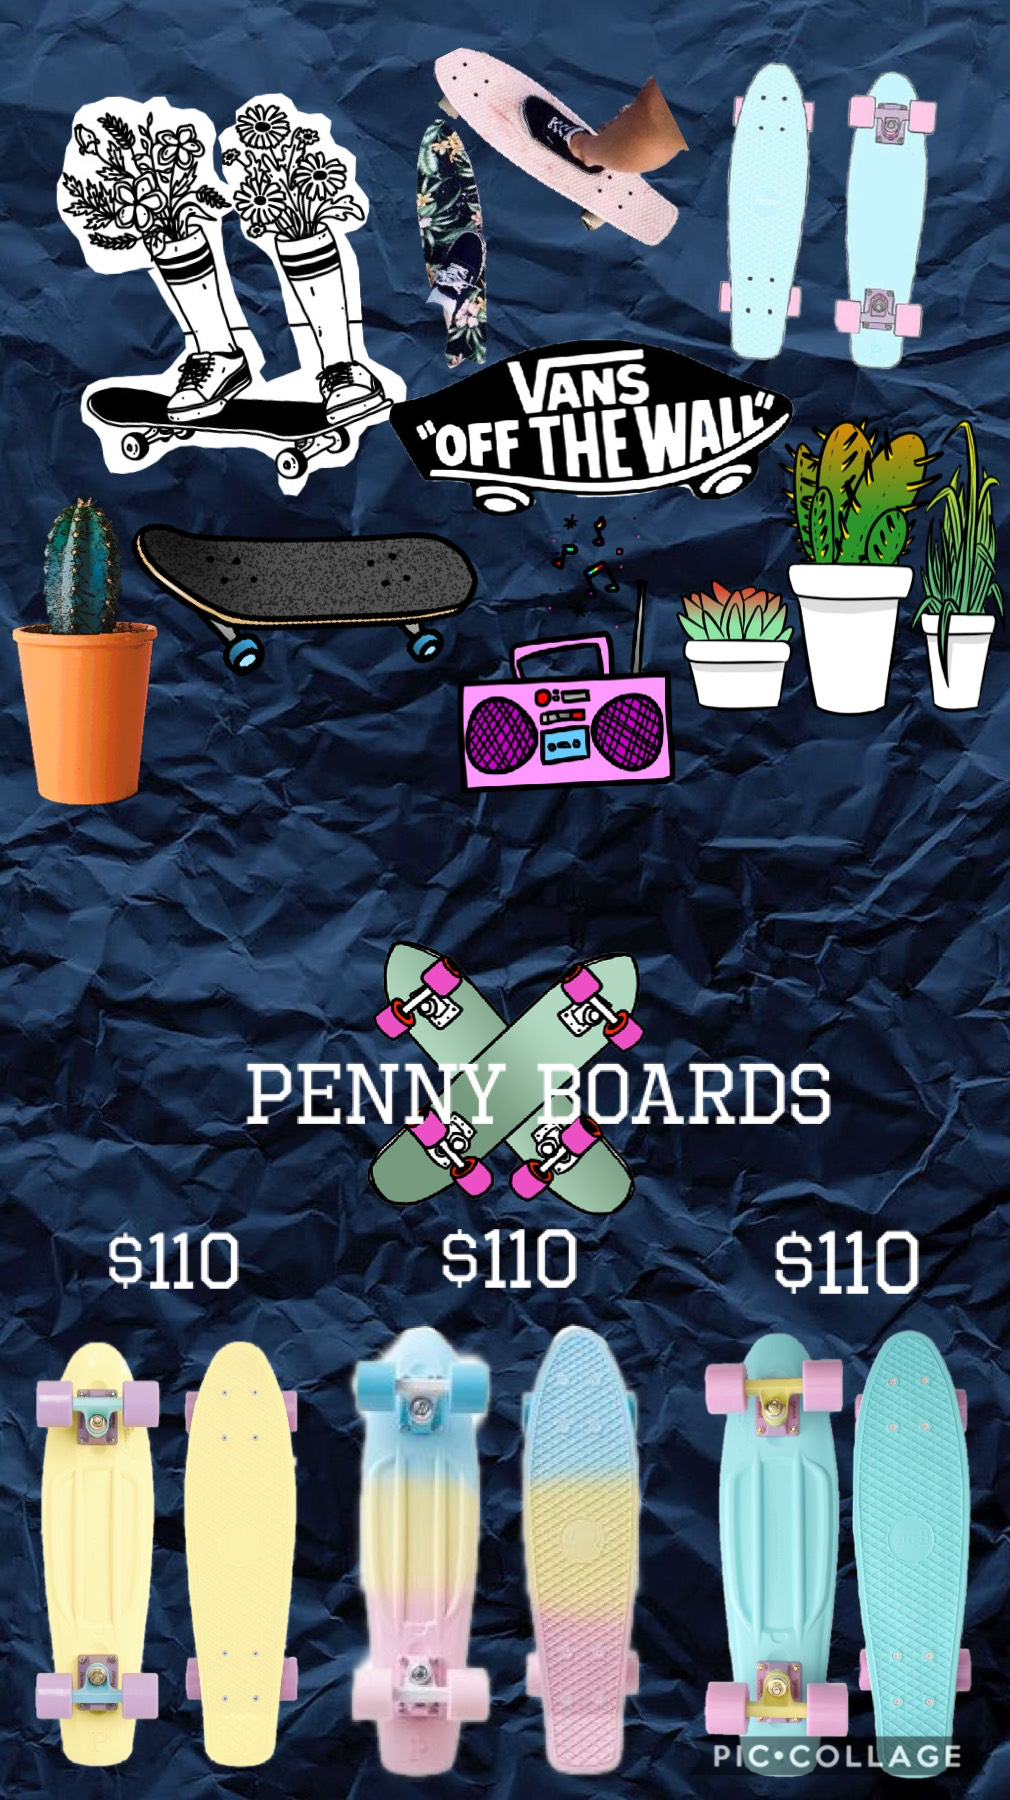 Really Wantin a penny board rn 